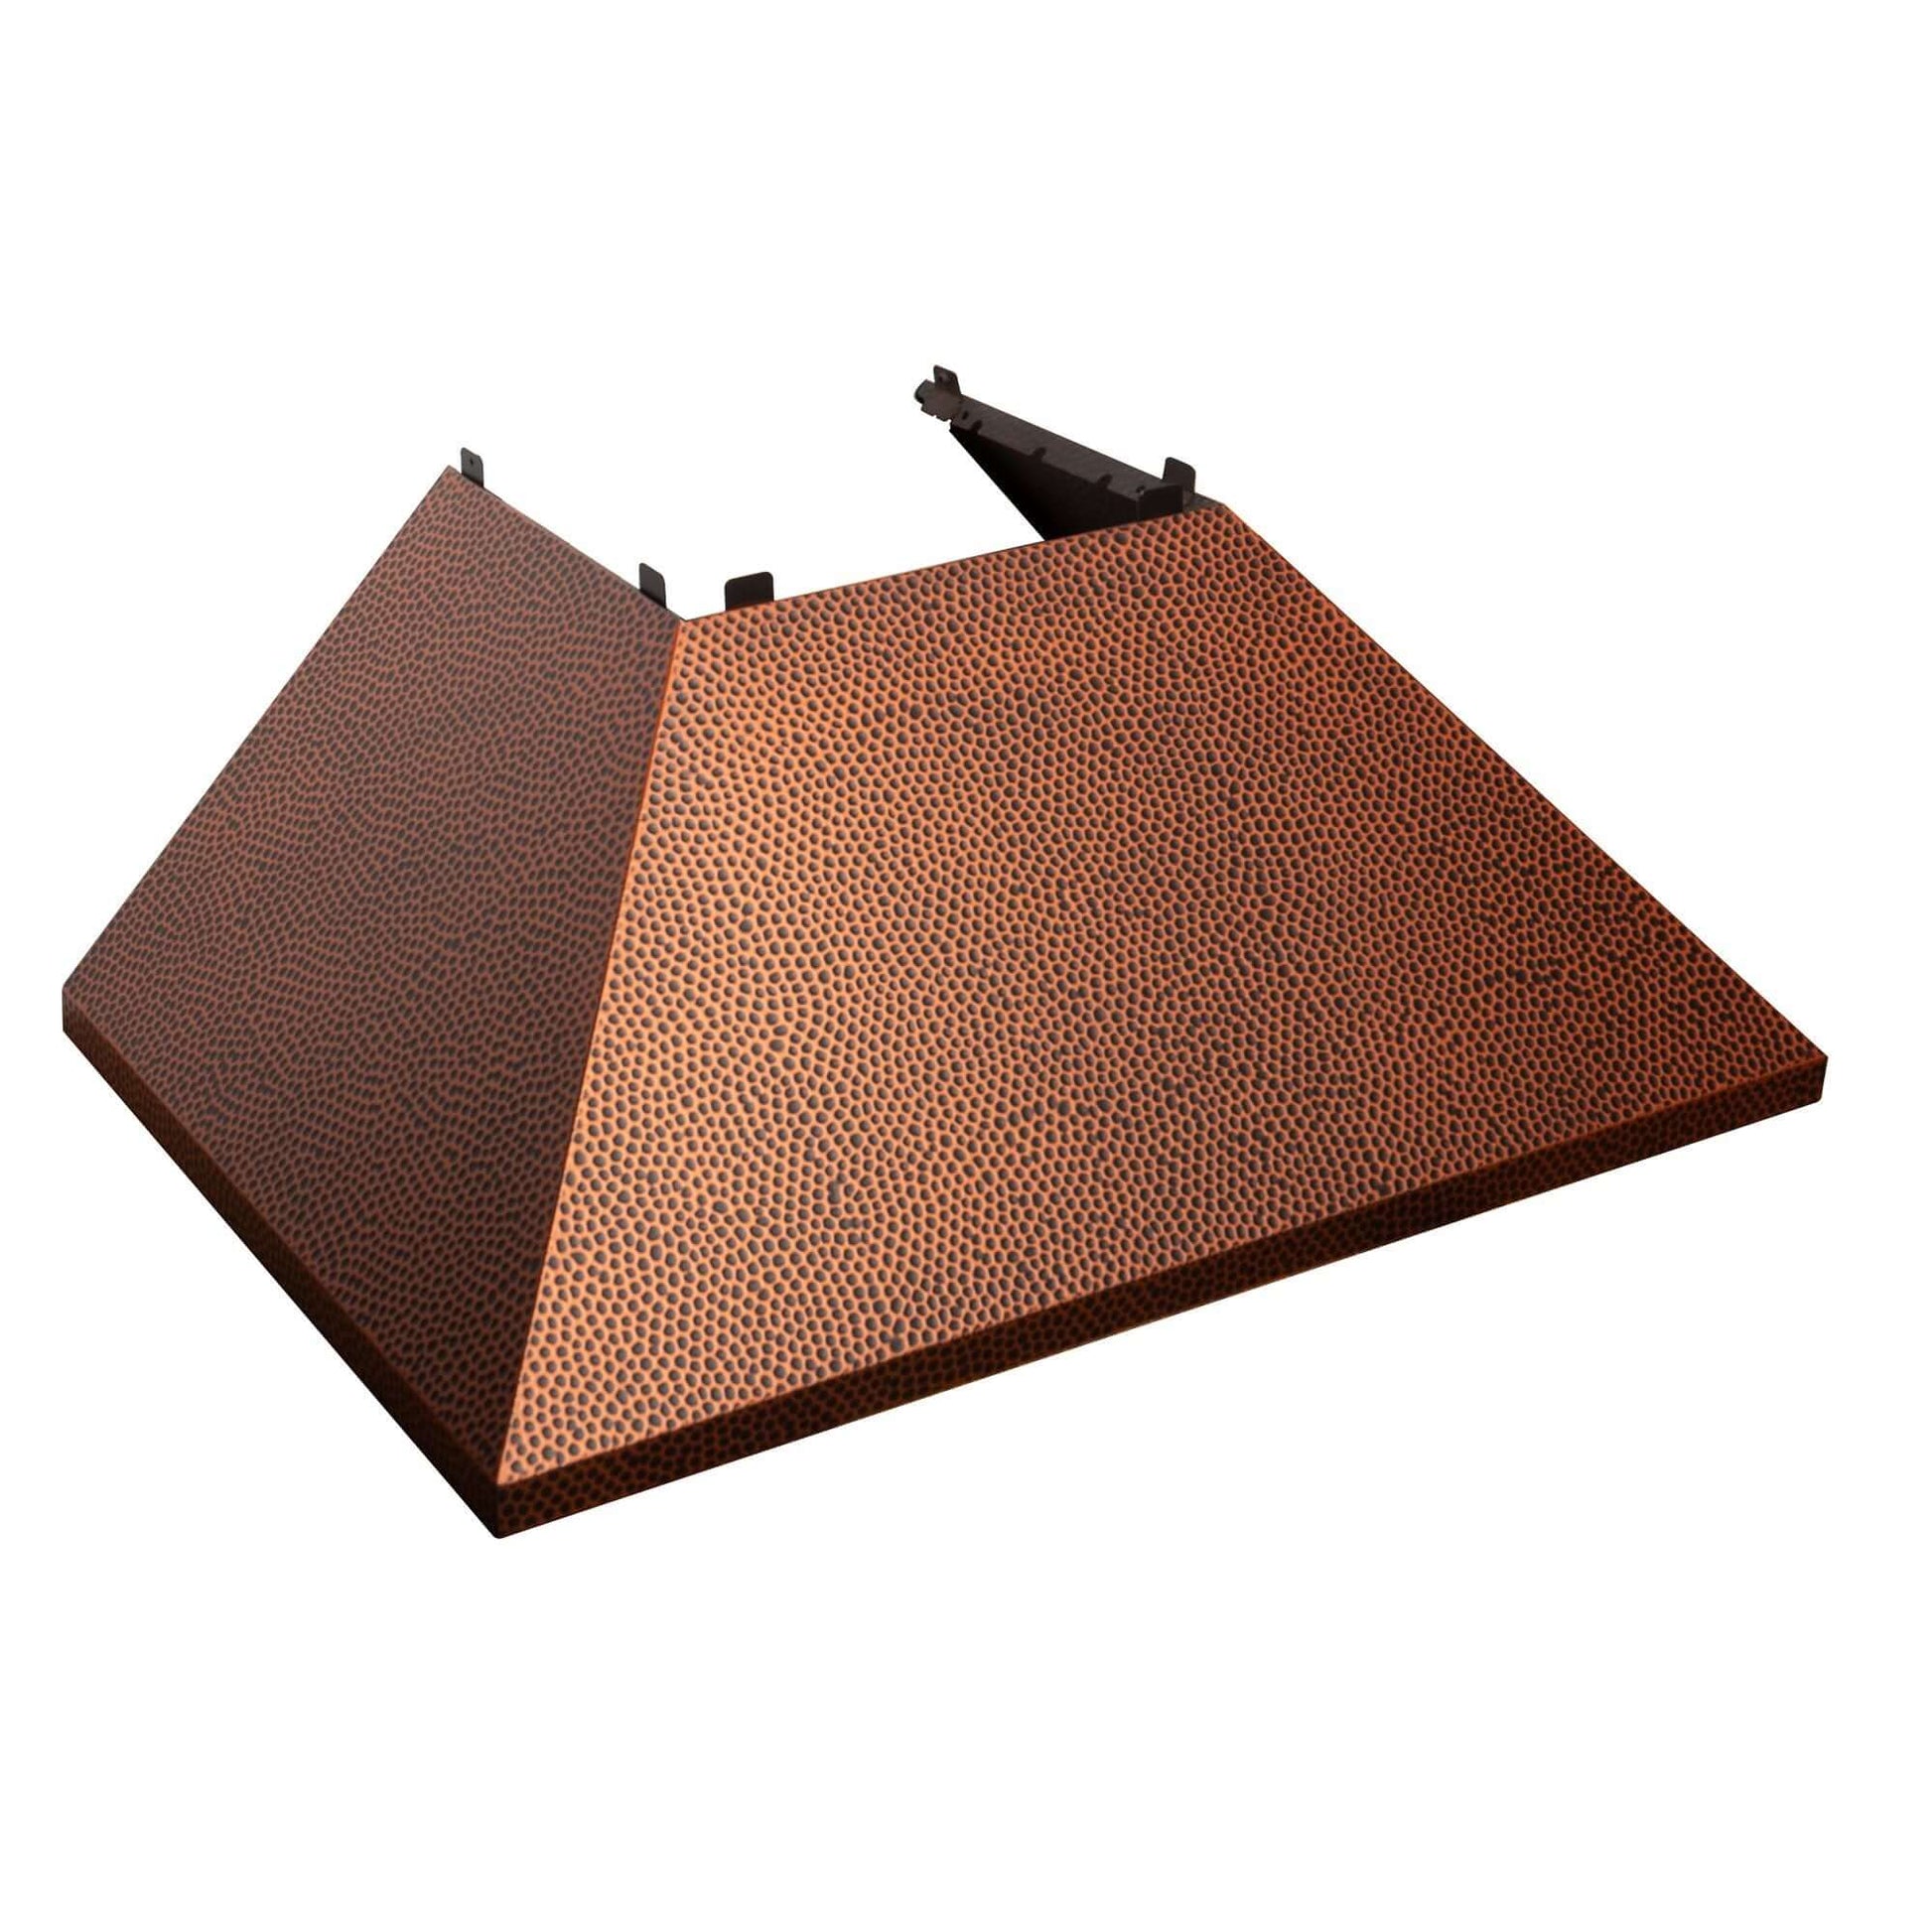 ZLINE DuraSnow Stainless Steel Range Hood - Hand Hammered Copper Shell